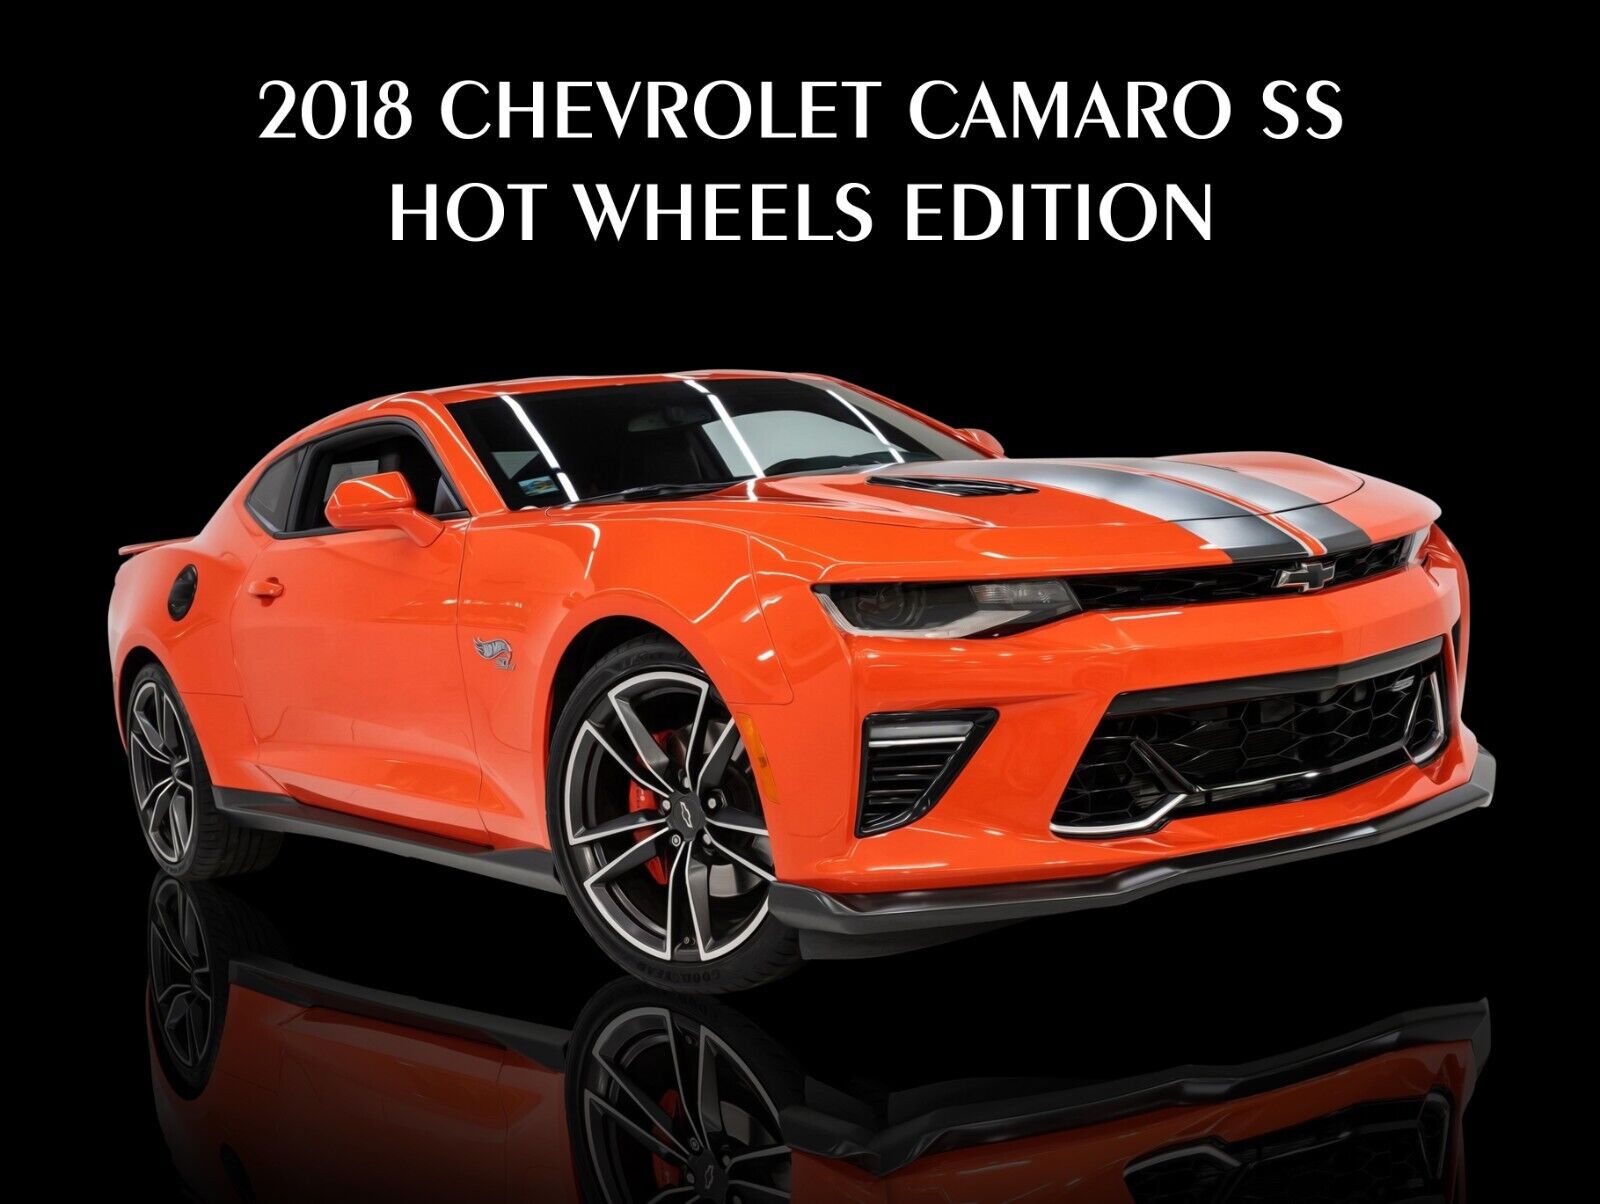 2018 Chevrolet Camaro NEW METAL SIGN: Hot Wheels Edition in Orange & Black